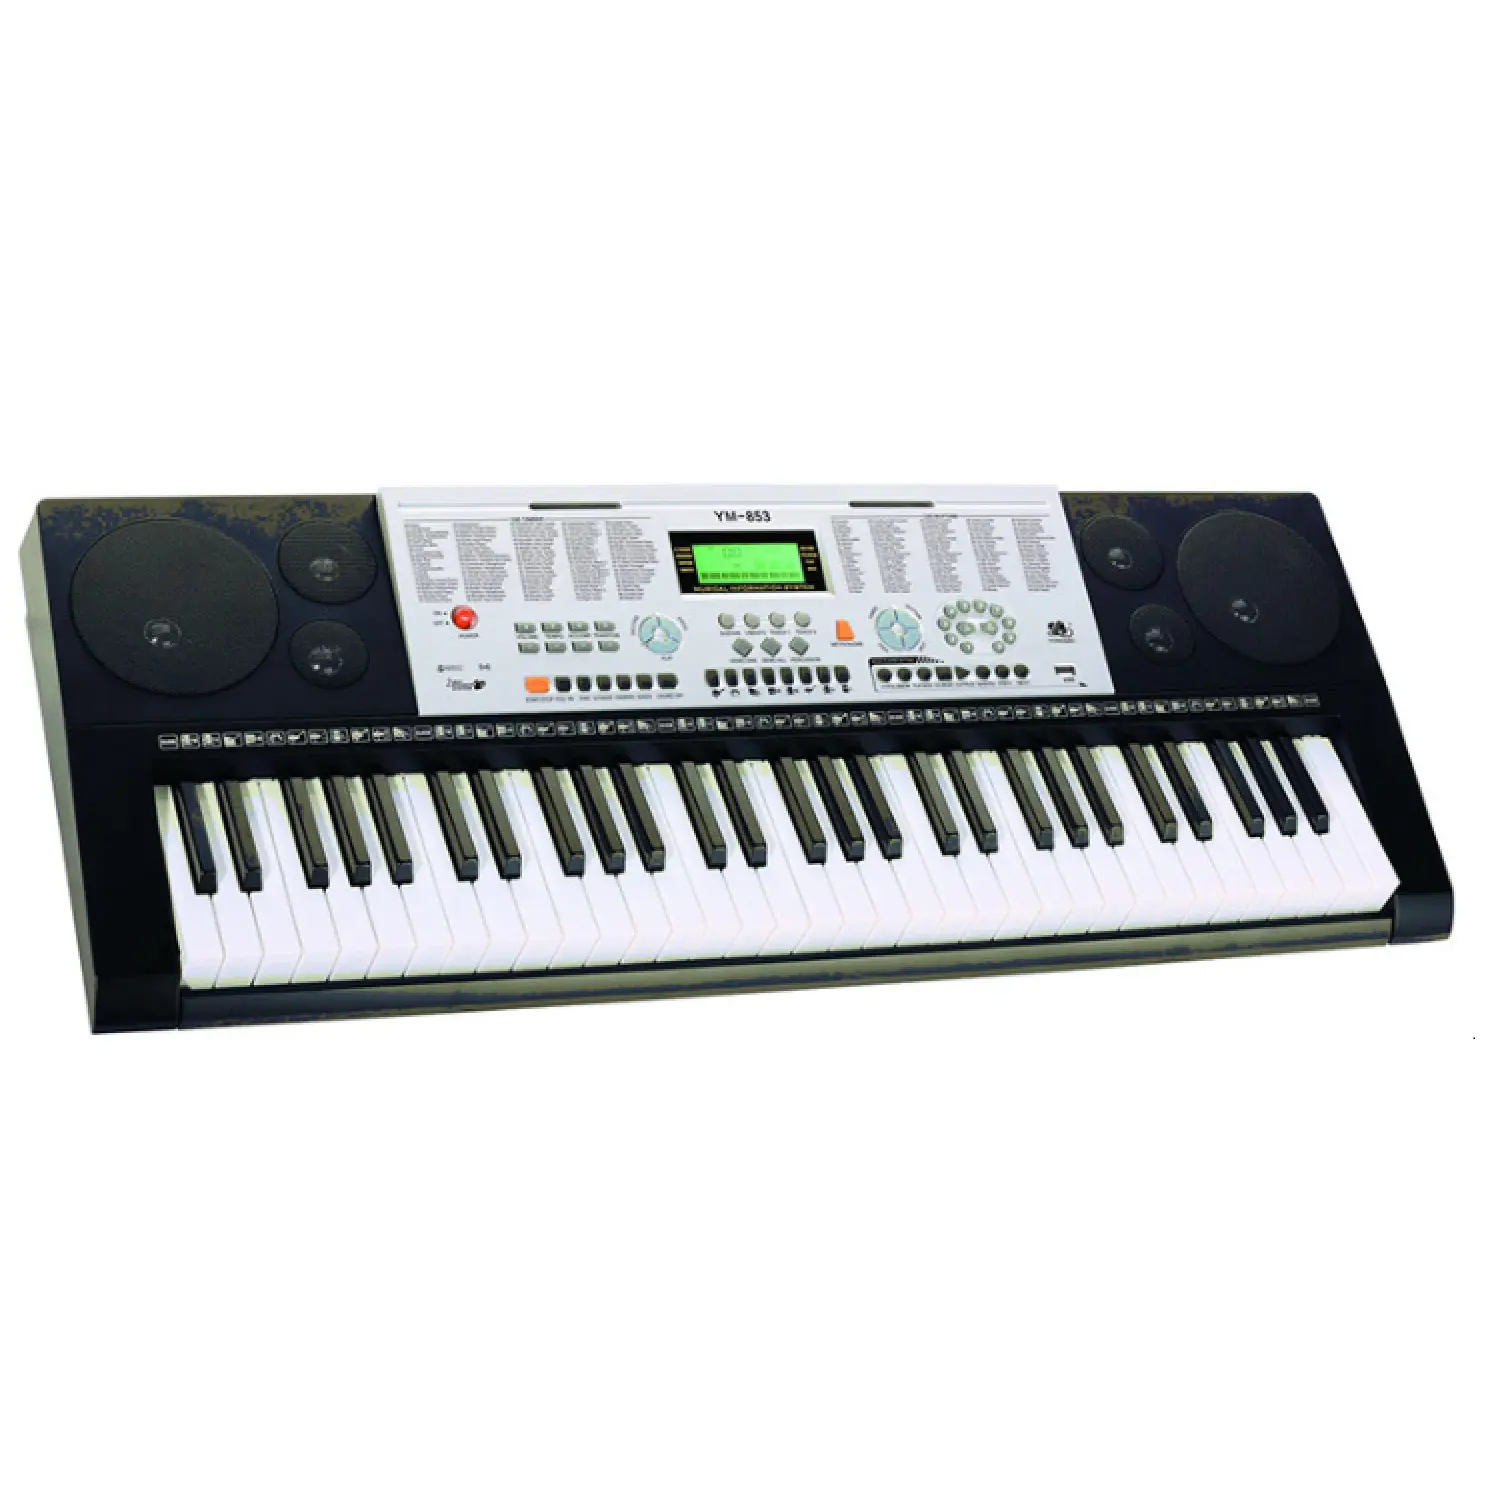 Professional musical instruments display standard piano electronic 61 keys keyboard